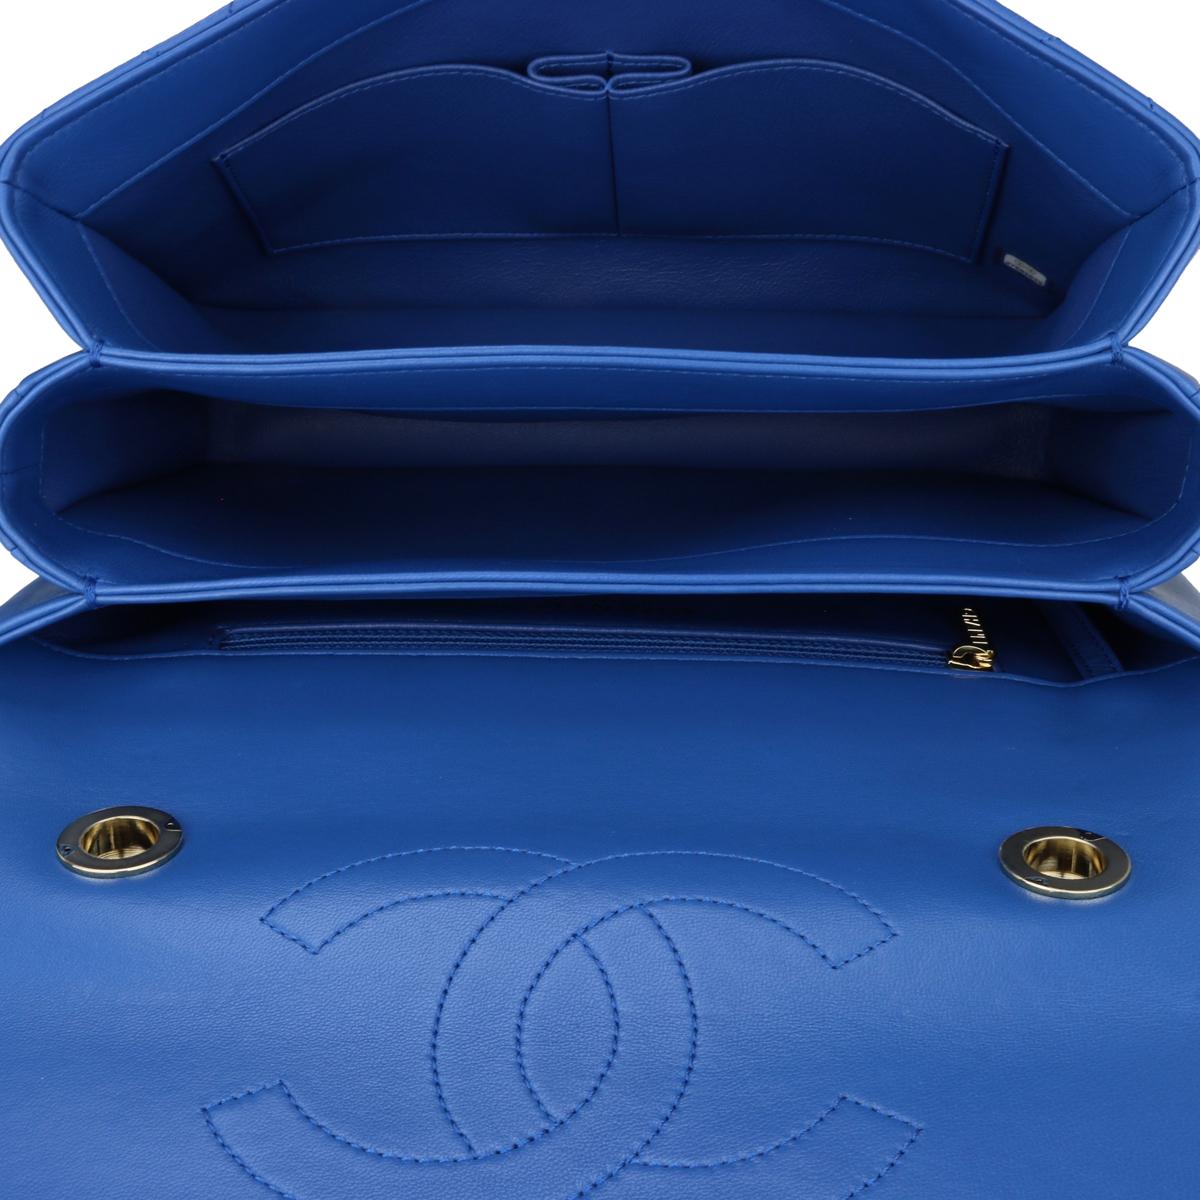 CHANEL Trendy CC Top Handle Bag Medium Blue Lambskin with Gold Hardware 2019 10